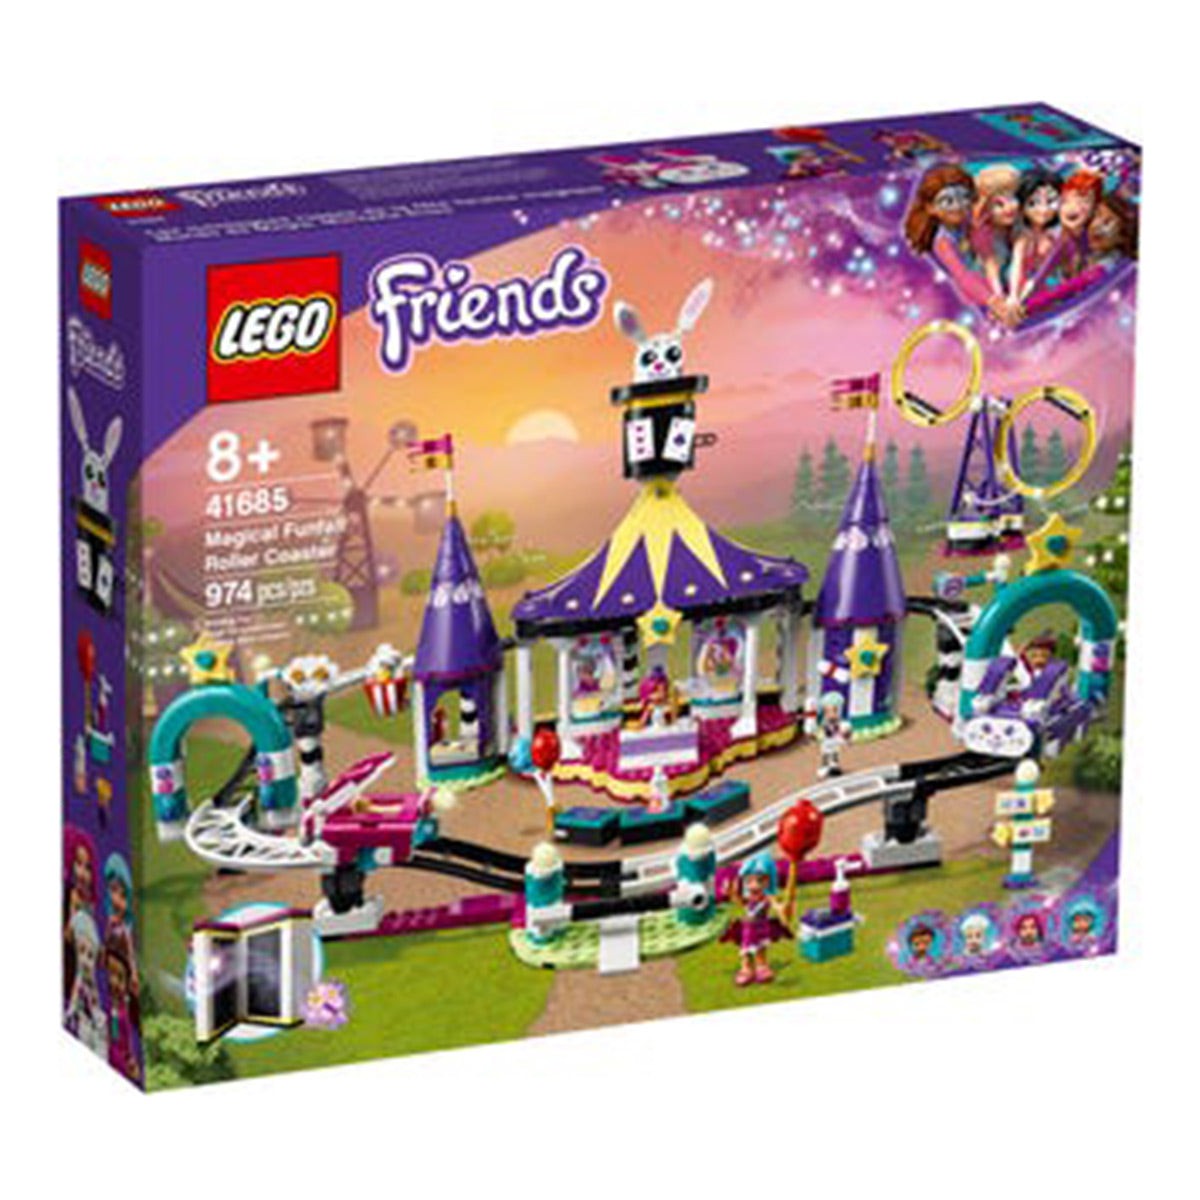 LEGO JOUET K.I.D. INC Toys & Games LEGO Friends Magical Funfair Roller Coaster, 41685, Ages 8+, 974 Pieces 673419342025